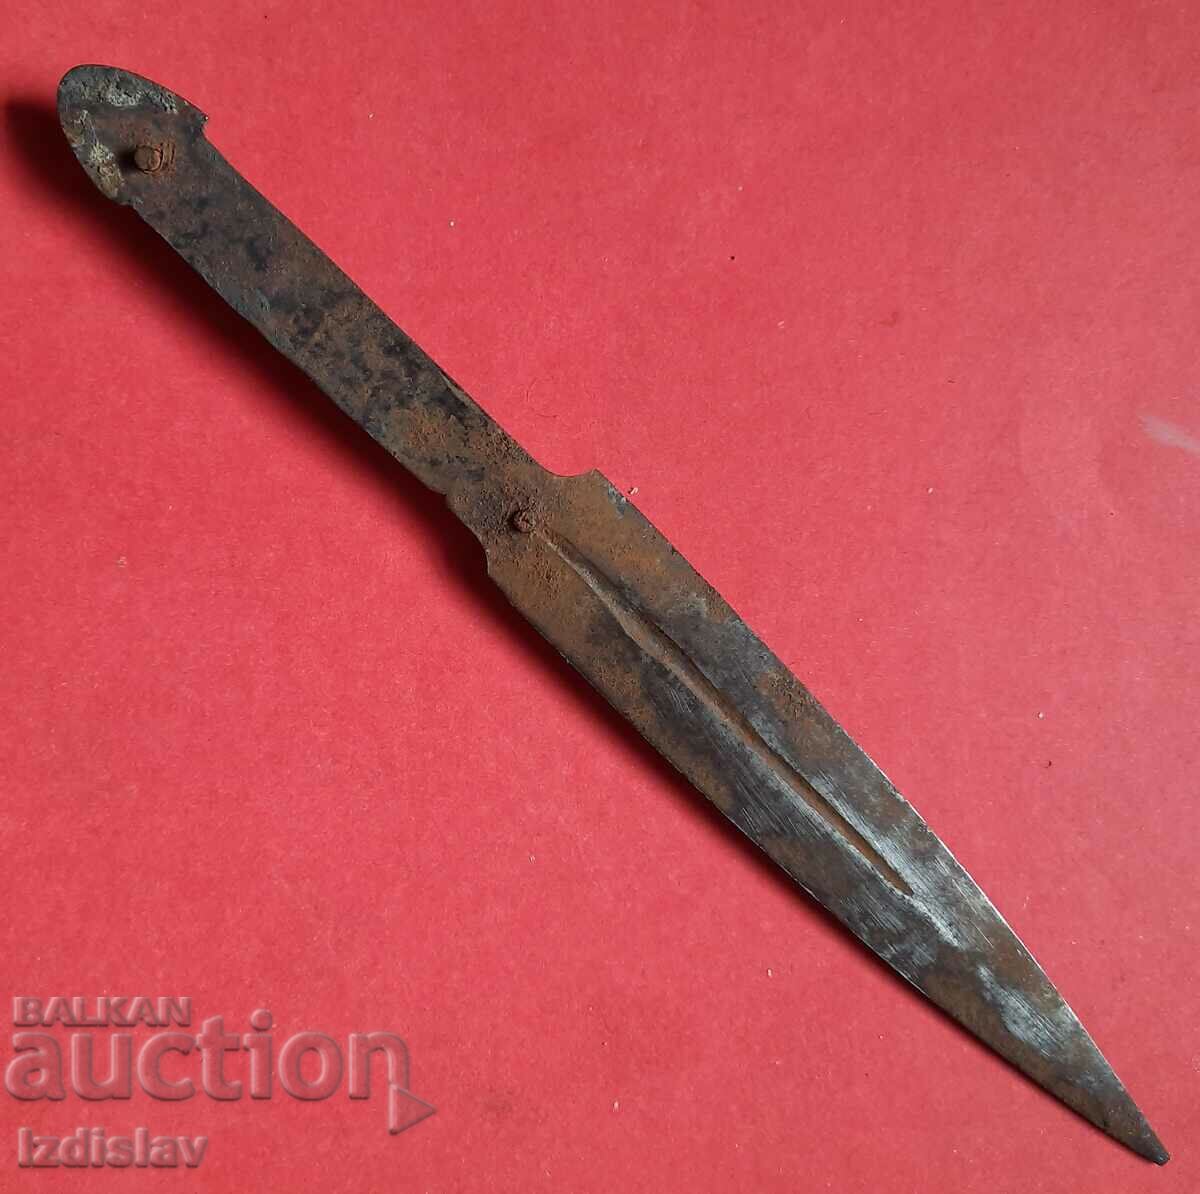 Blade of a small Renaissance dagger